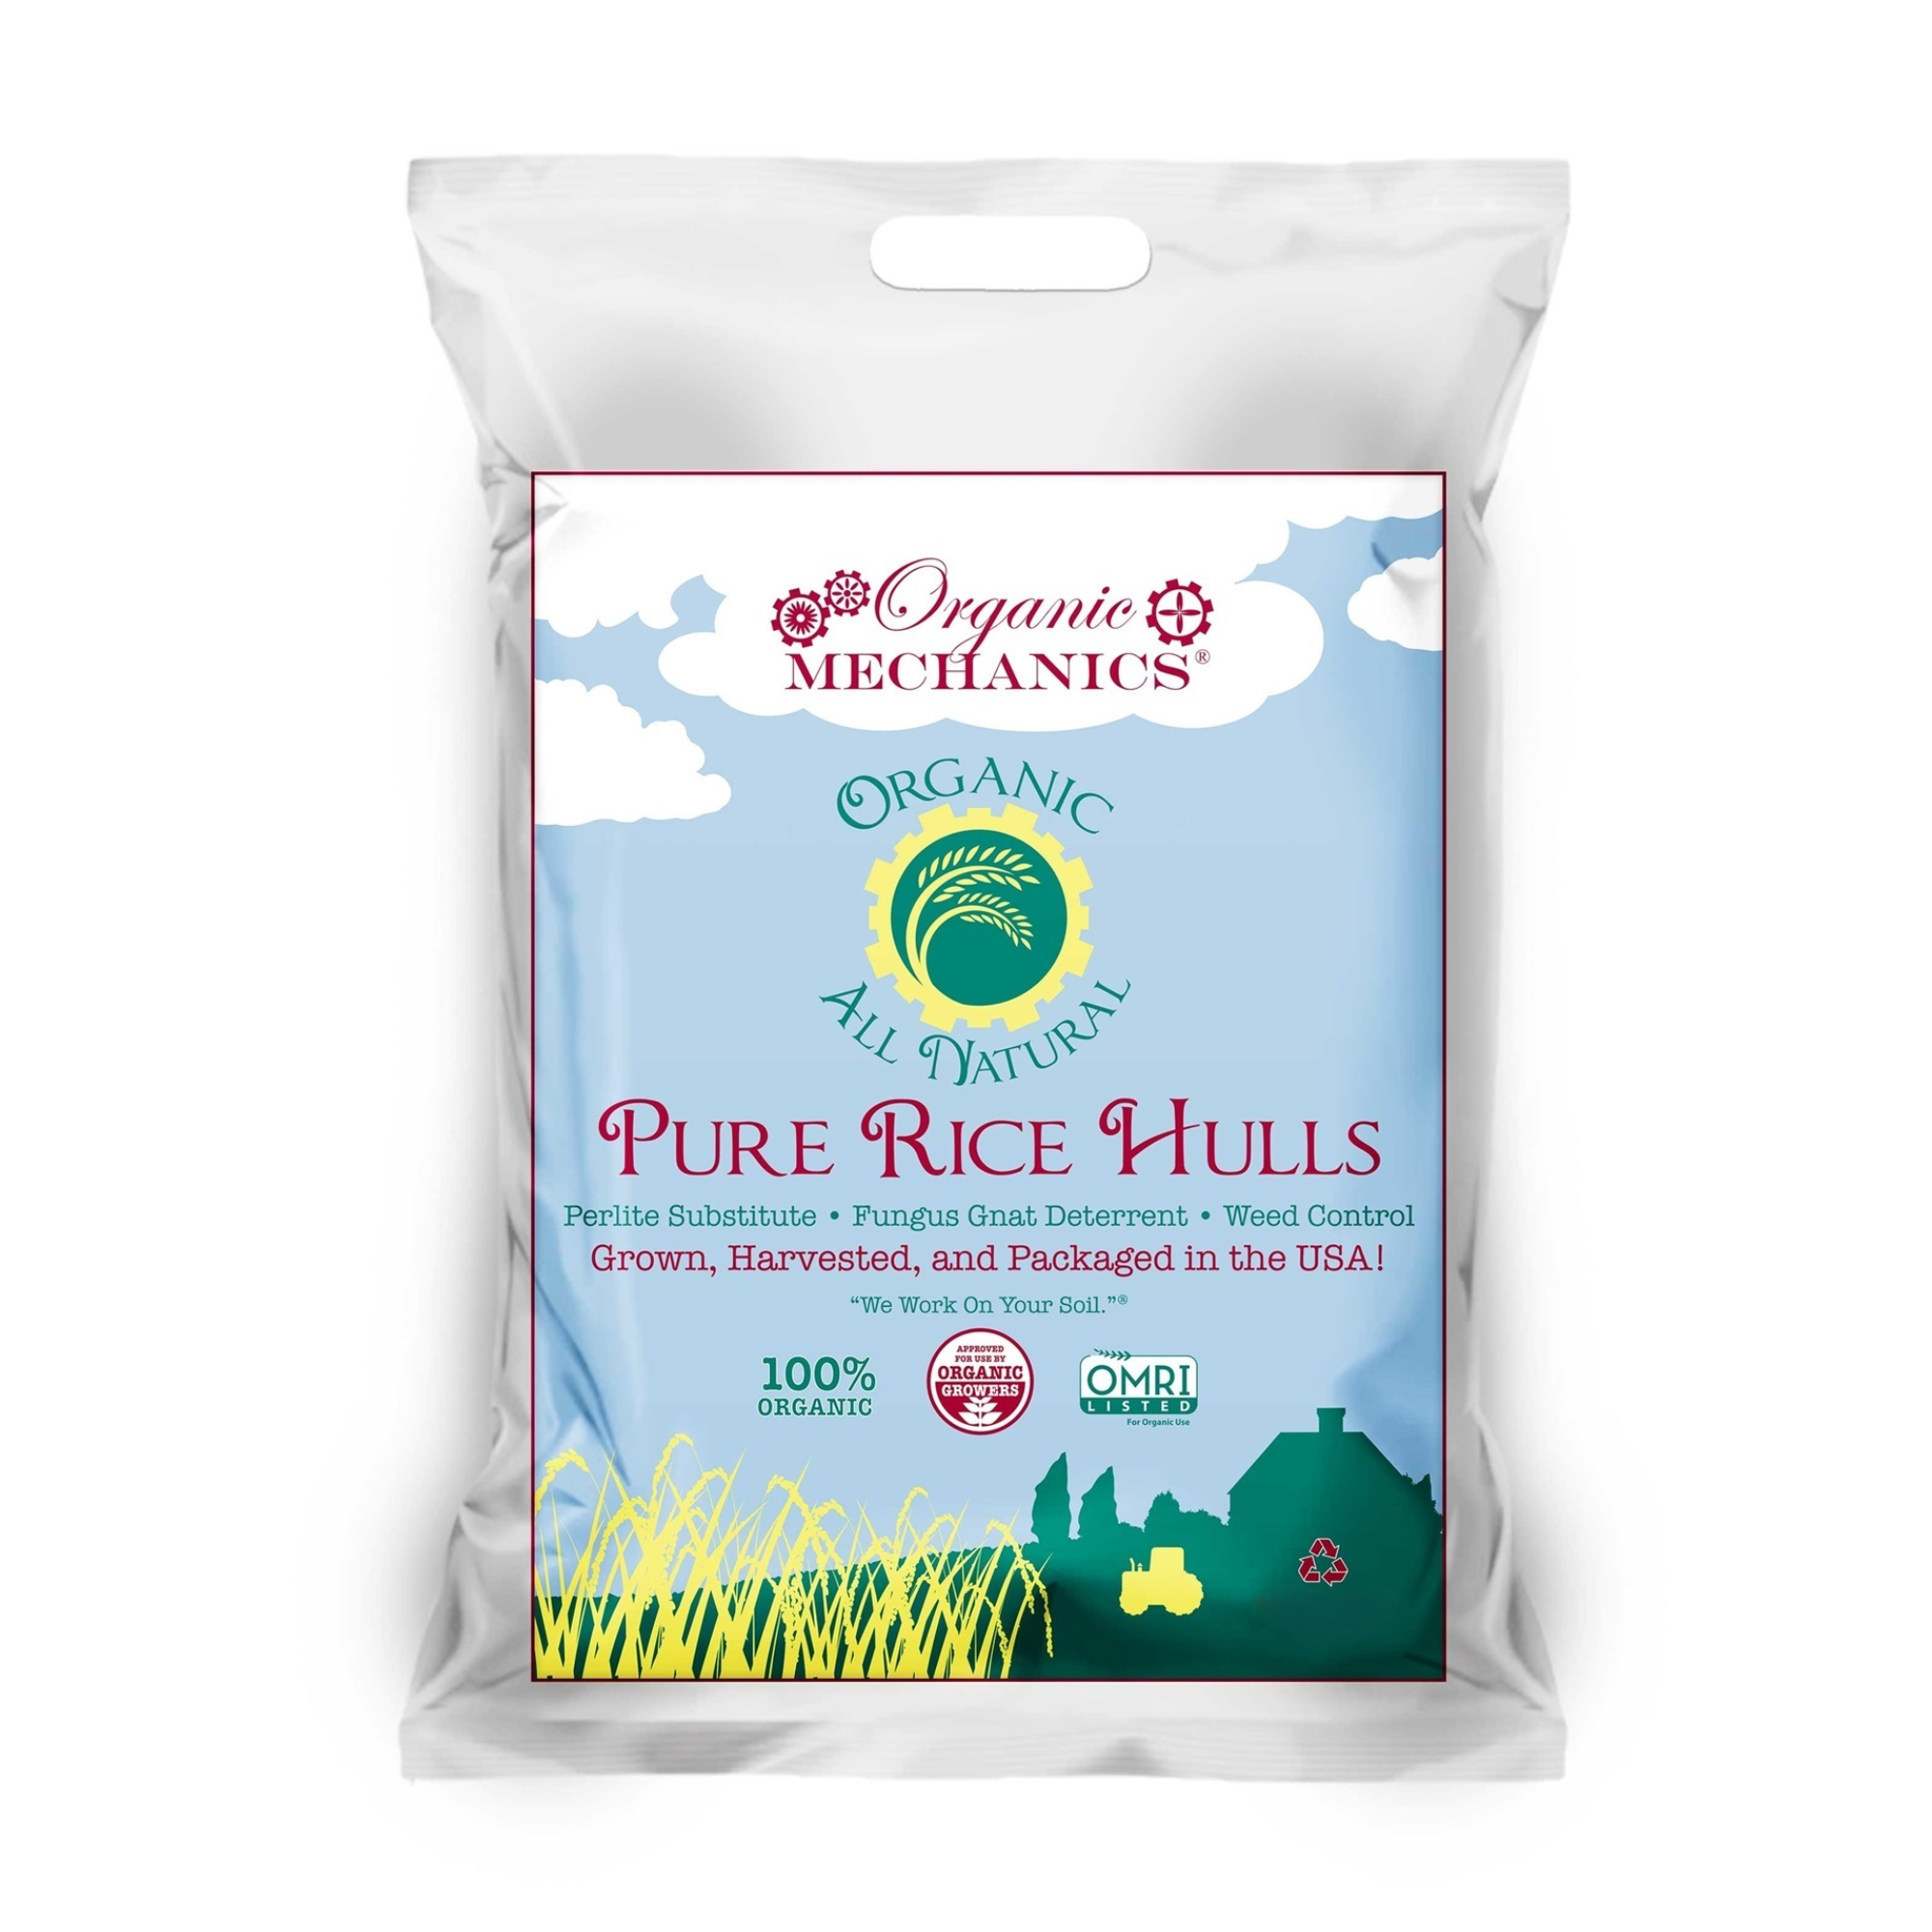 Organic Mechanics All Natural Pure Rice Hulls Perlite Substitute